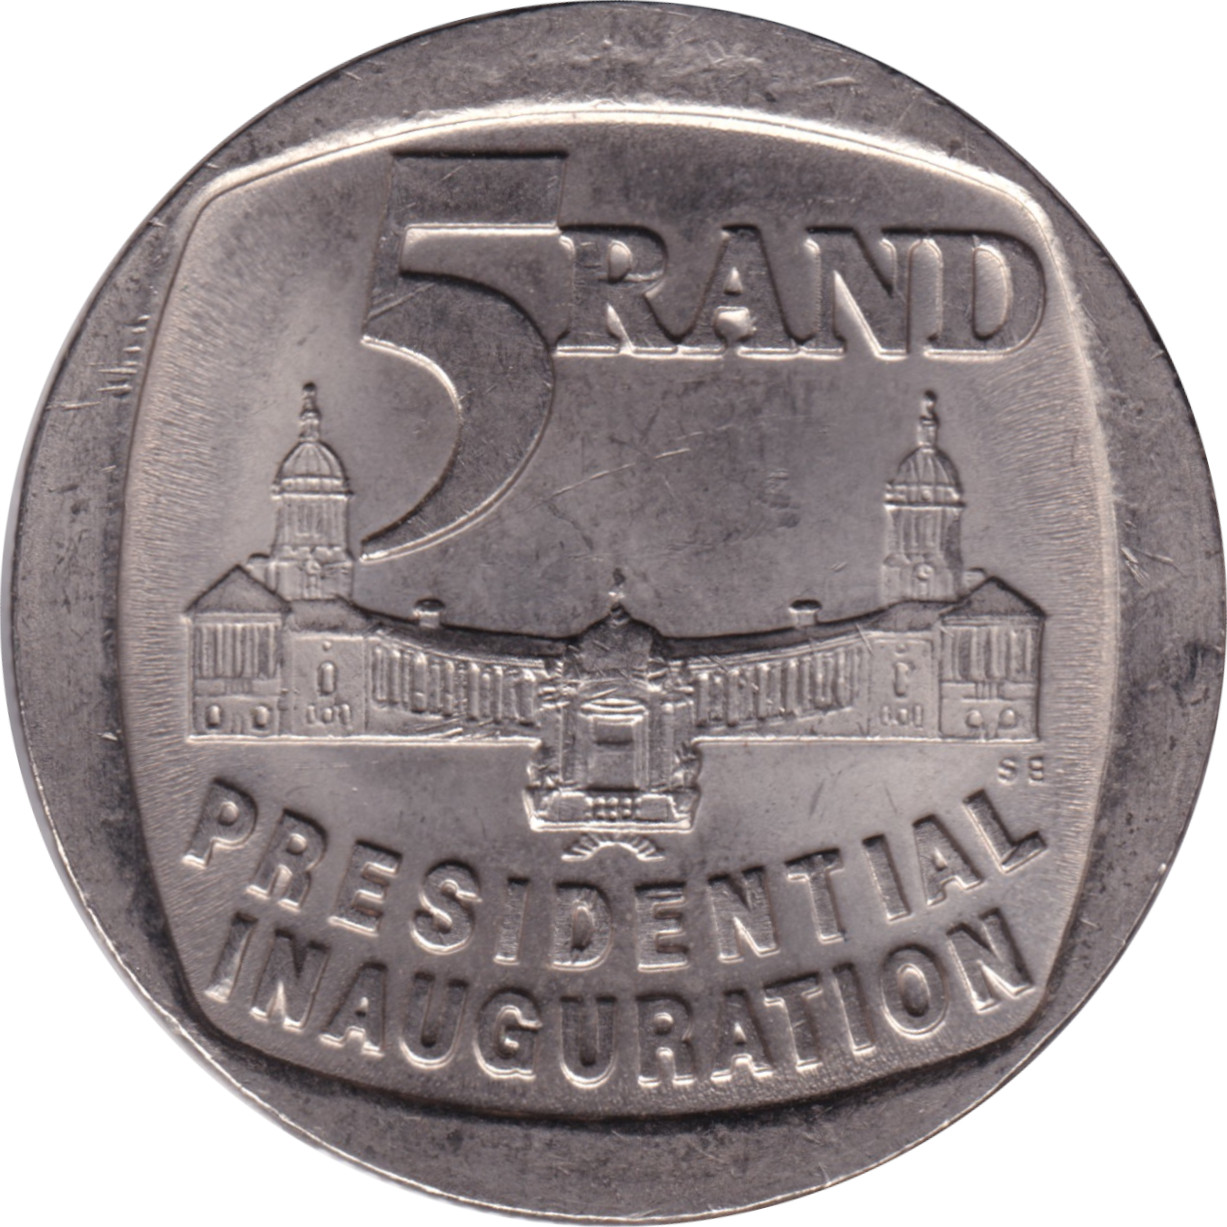 5 rand - Inauguration présidentielle